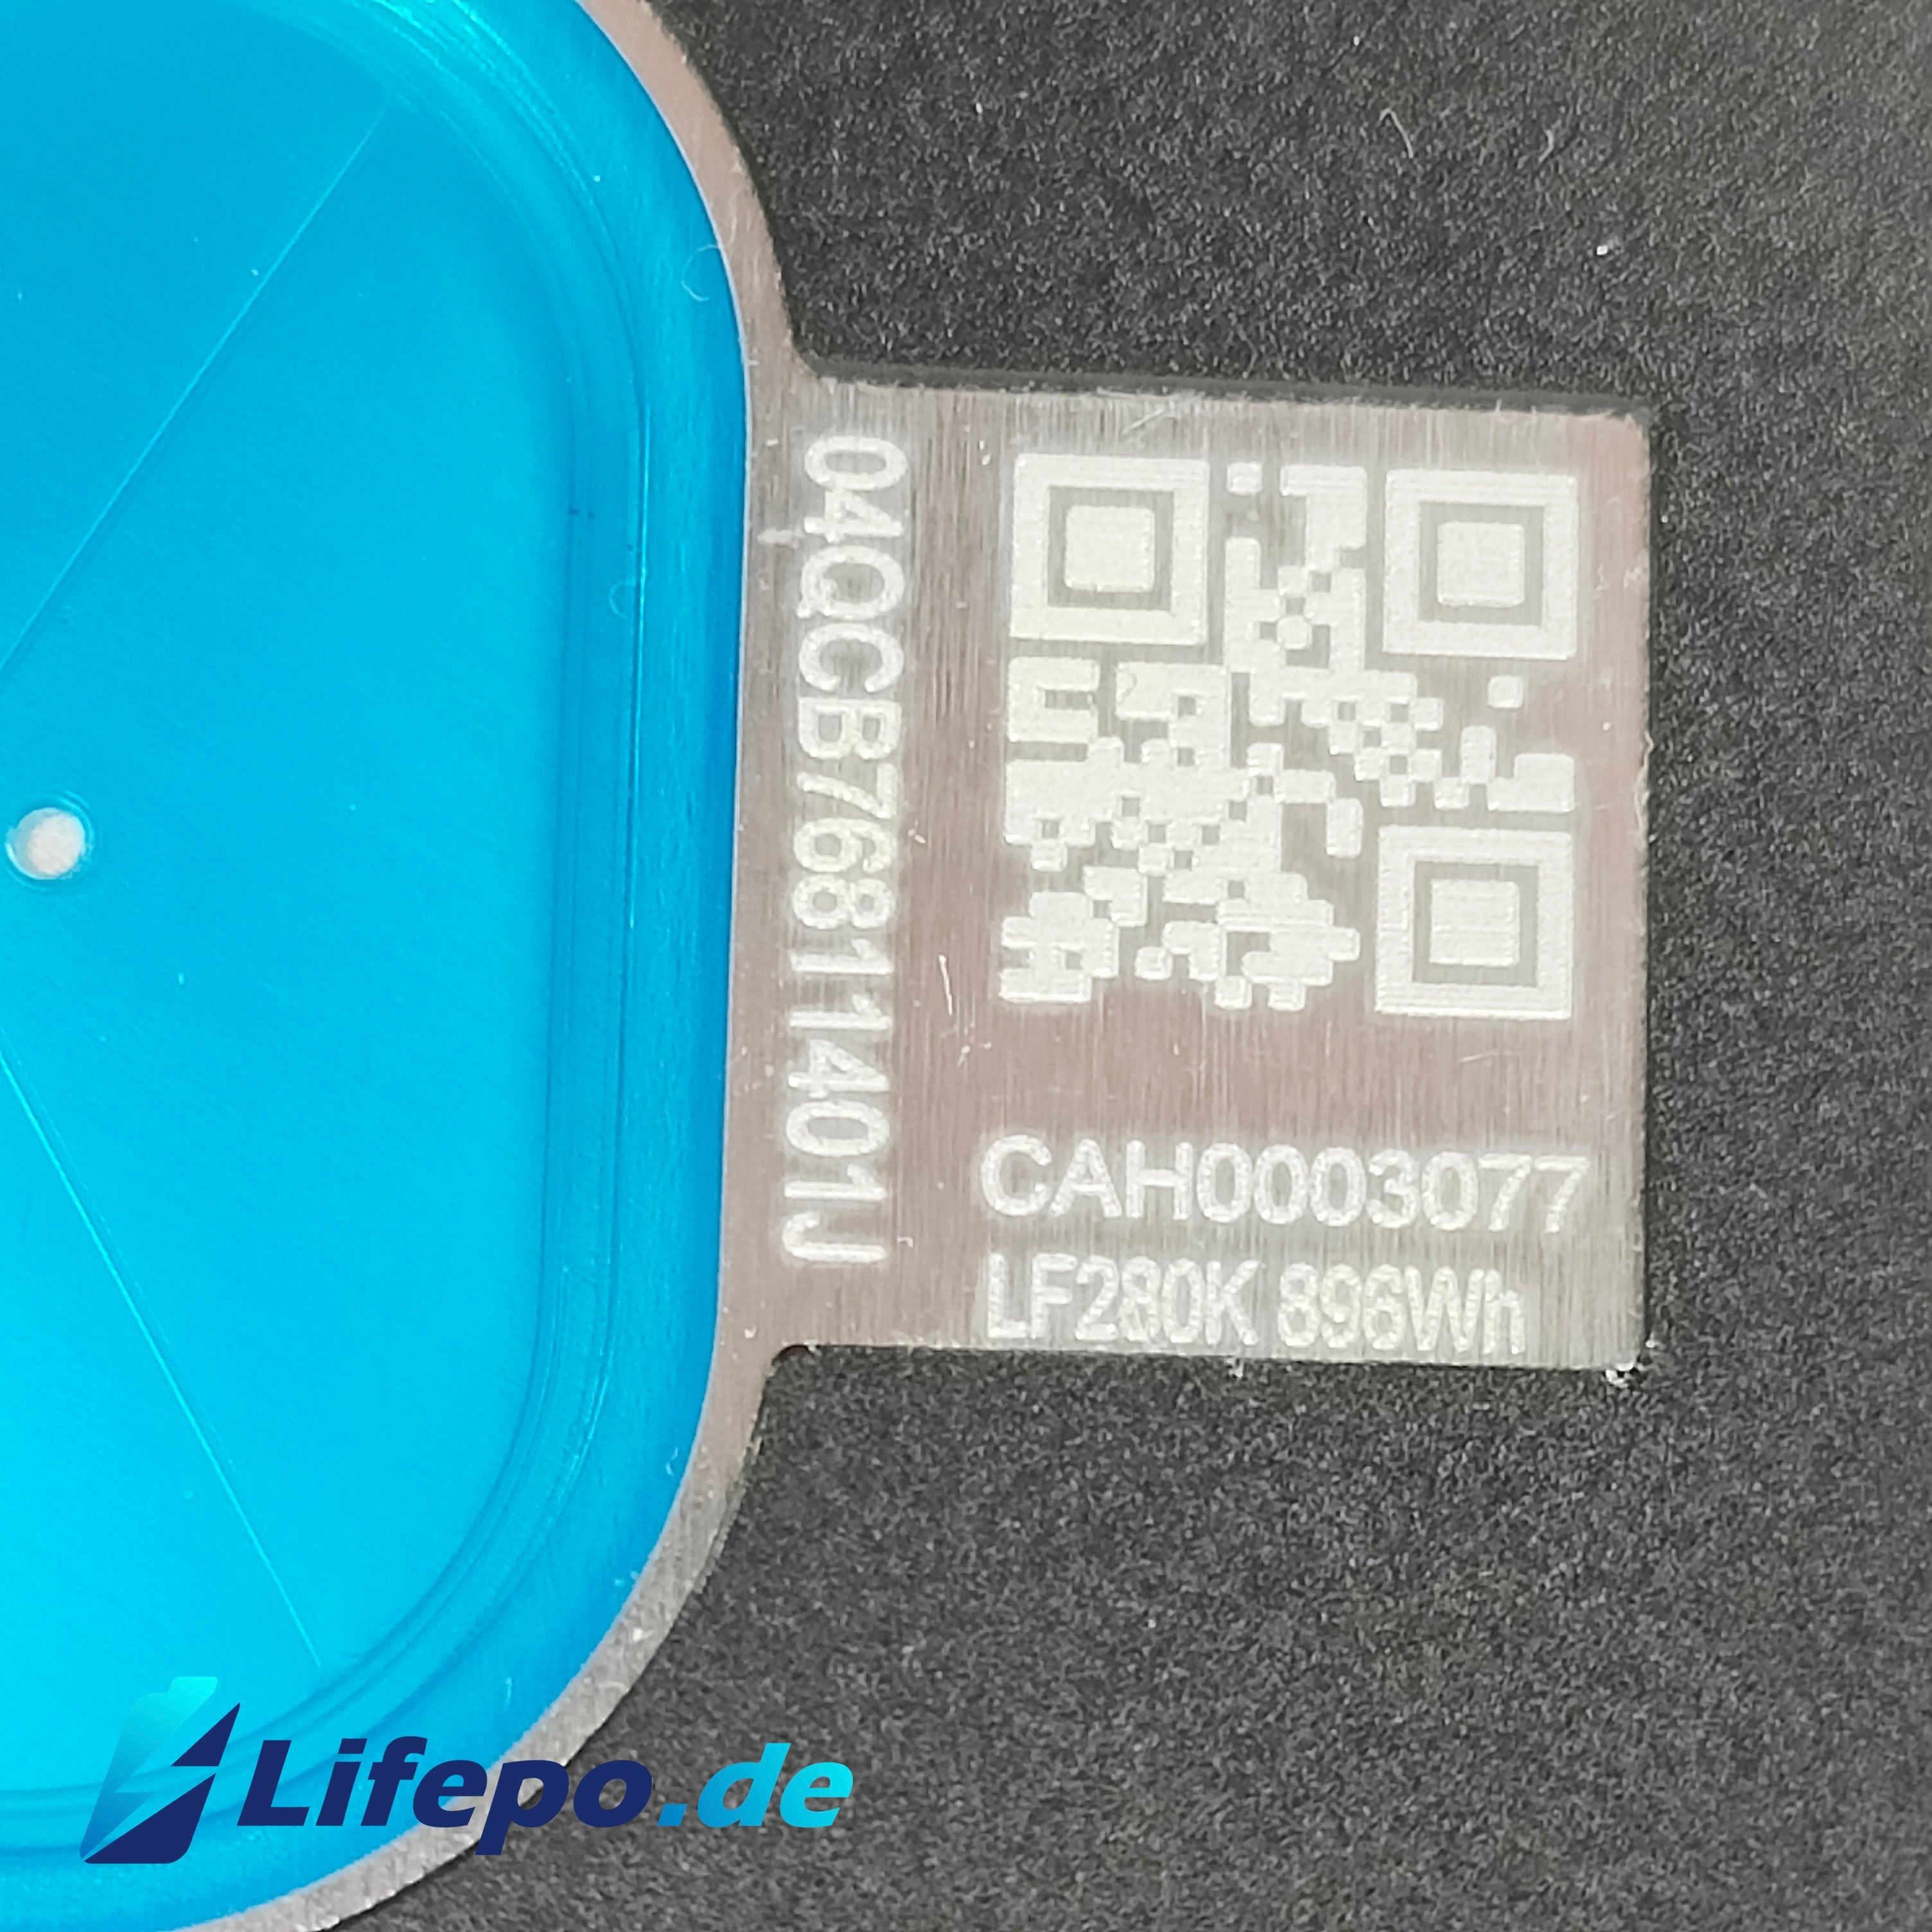 12v 560Ah Lifepo4 Batteriesystem mit EVE Grade A+ 8kWh –